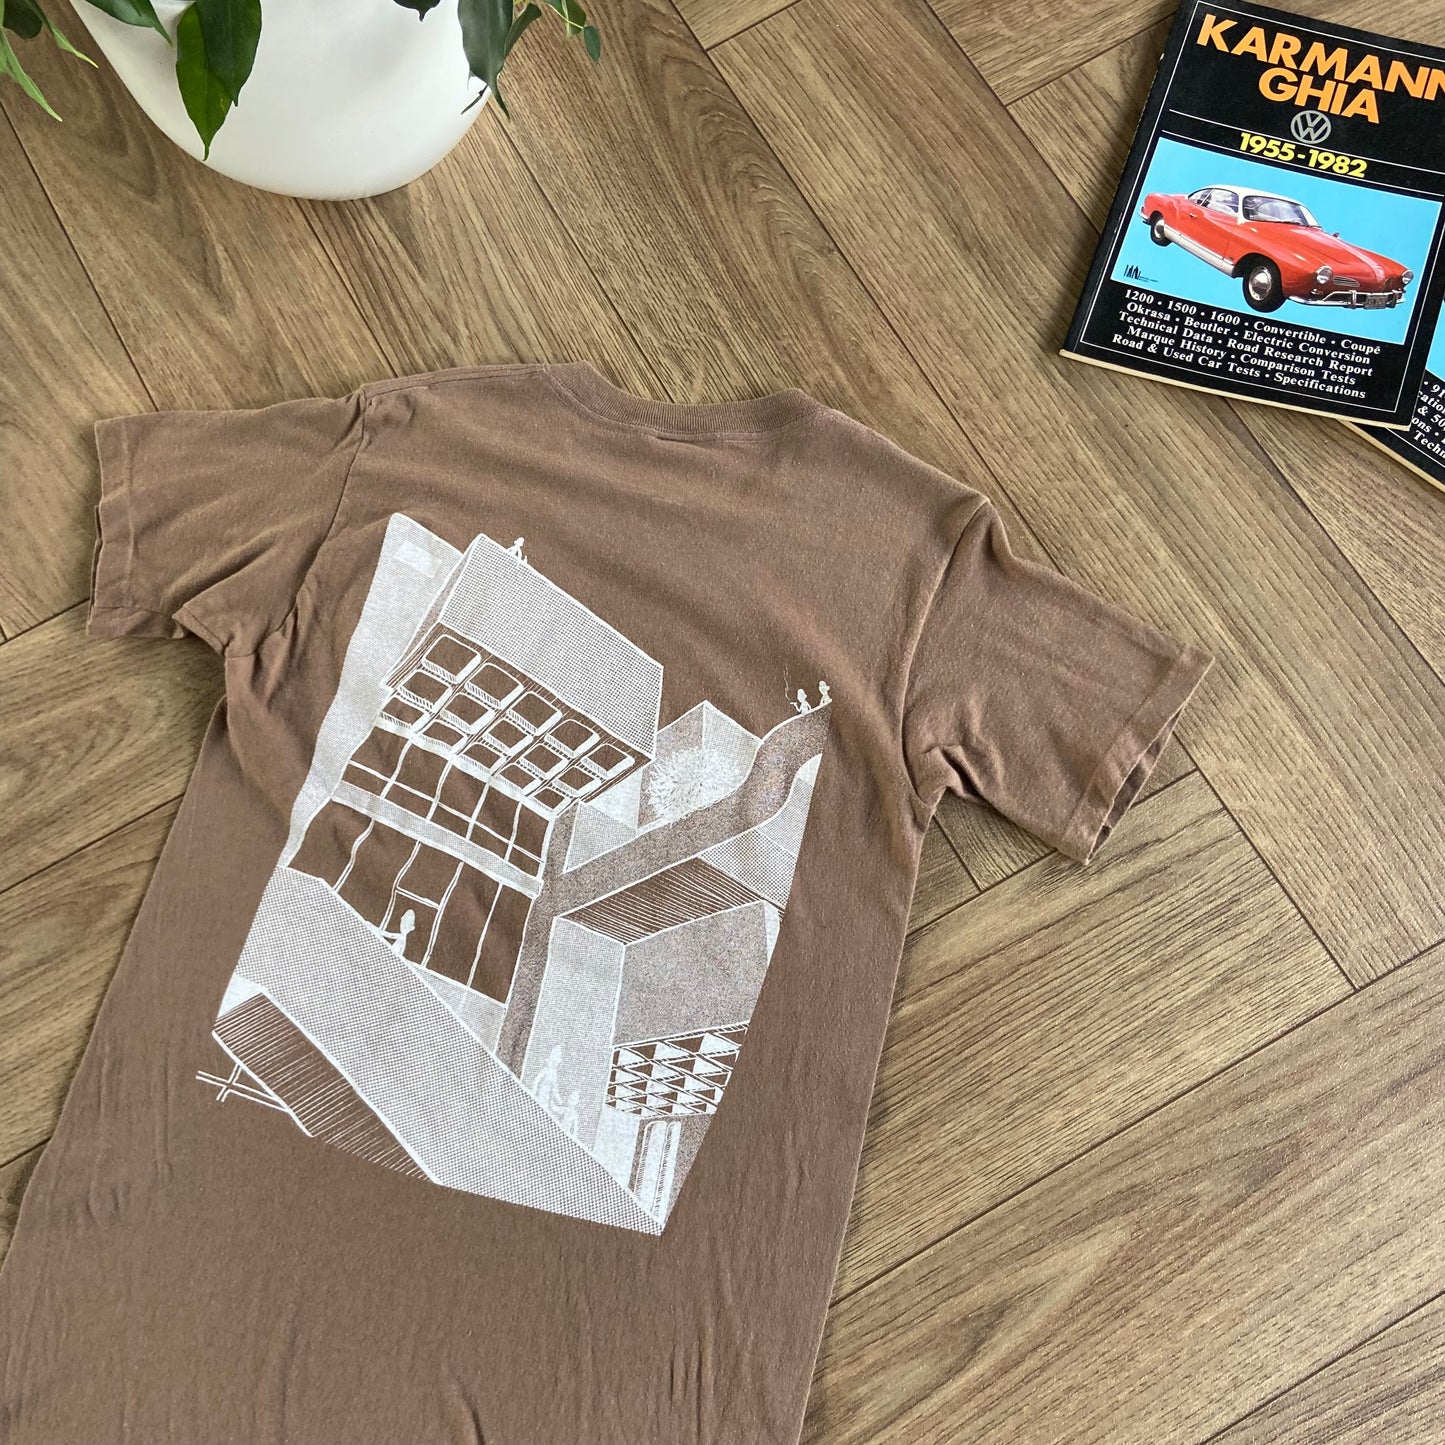 Stingray Reimagined “Barbican” T Shirt, Size M Tan